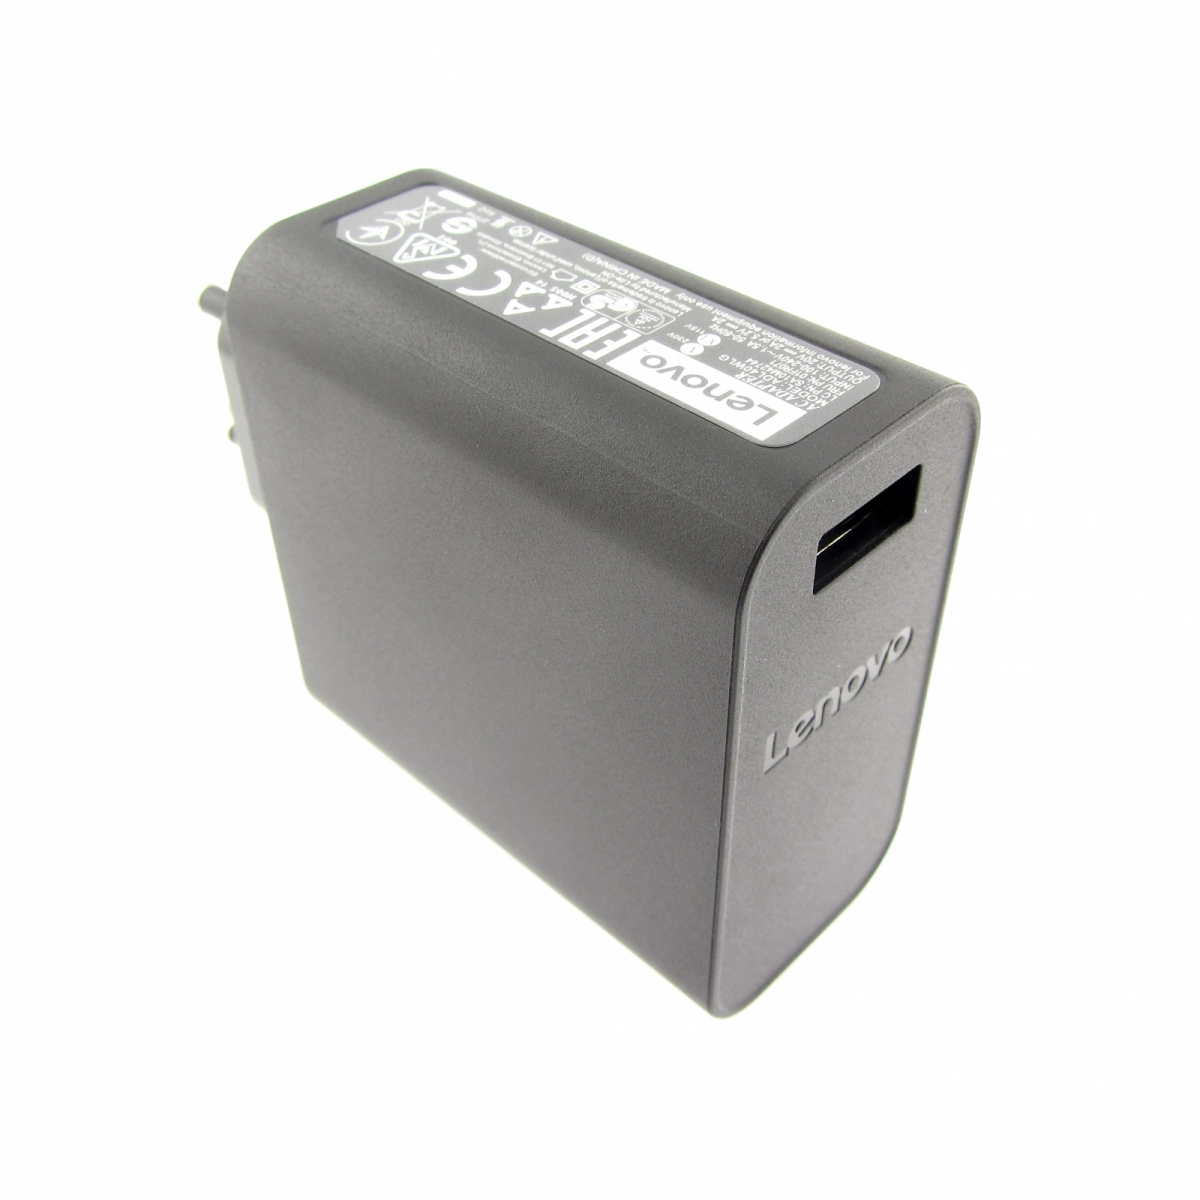 Original Netzteil für LENOVO 36200561, 20V, 2A, Stecker USB, ohne USB-Kabel